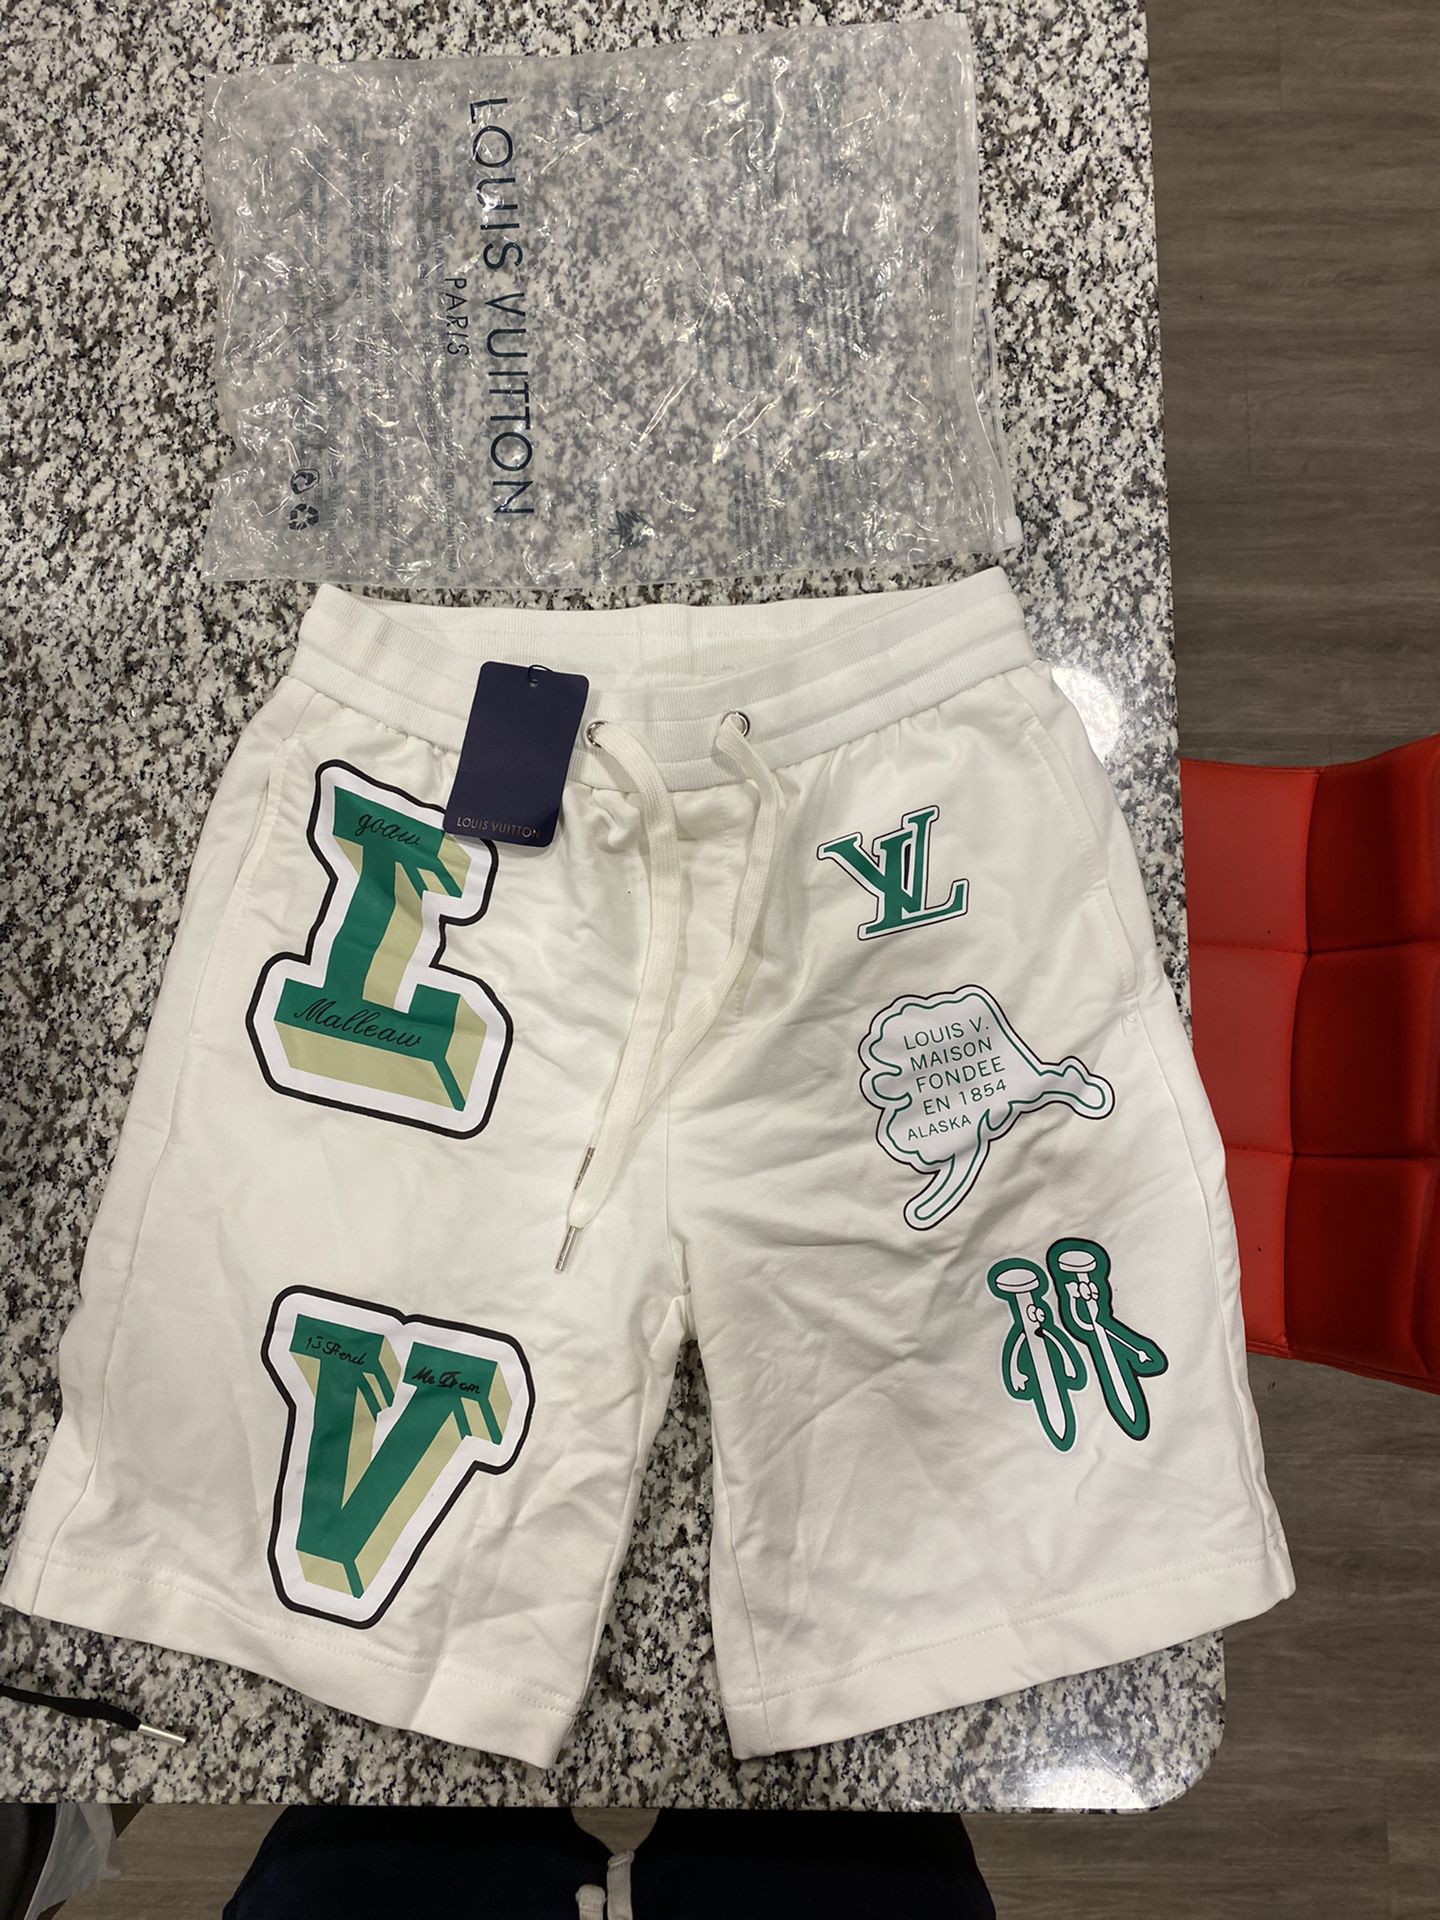 Louis Vuitton Shorts for Sale in Pompano Beach, FL - OfferUp